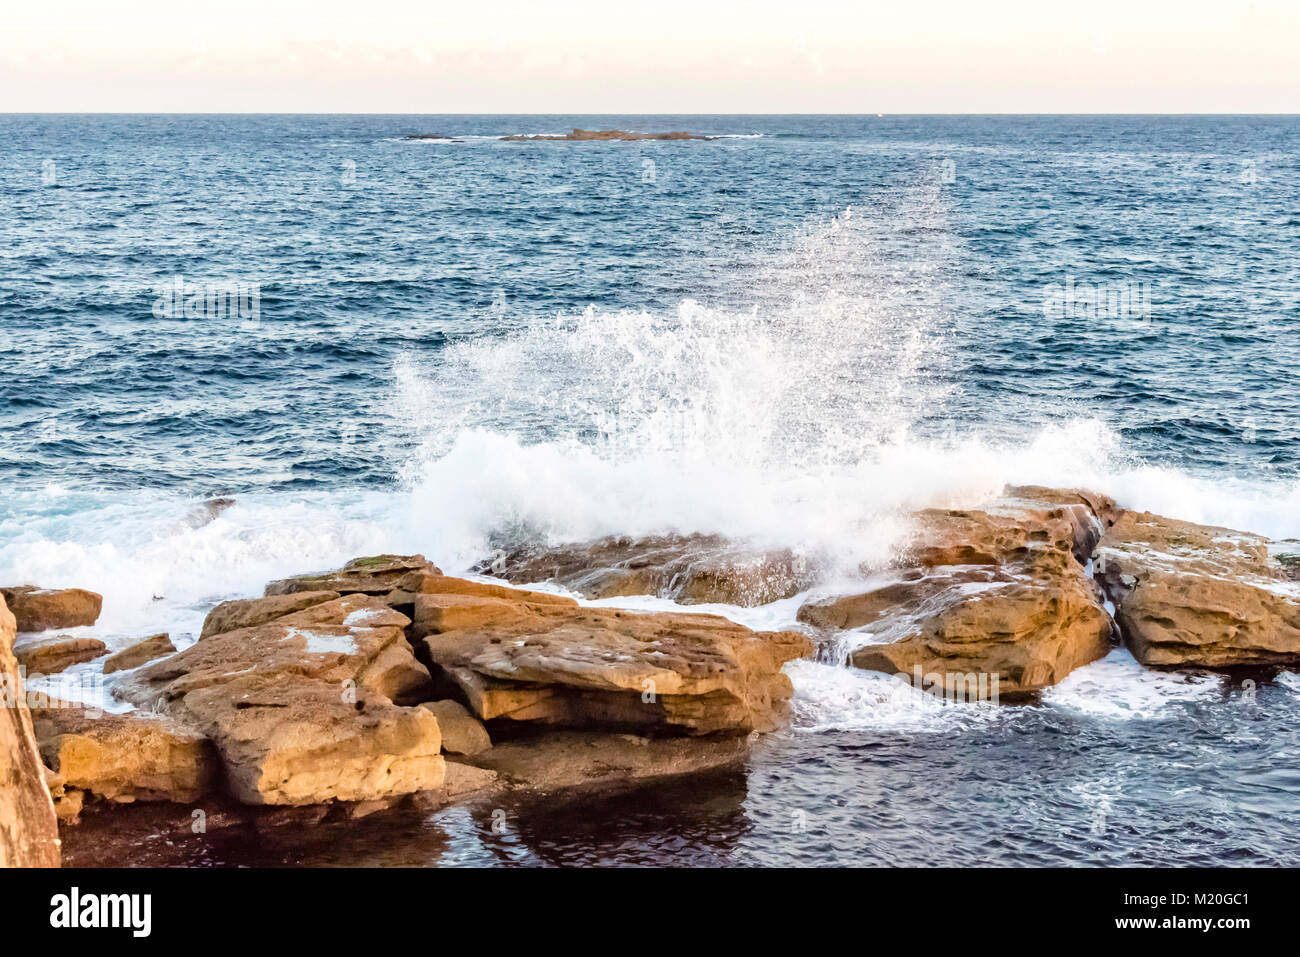 Scenic view of blue Pacific ocean and Australian coast with waves crashing on rocks, daytime.  Sea water splashing, Coogee Beach, Sydney, Australia. Stock Photo